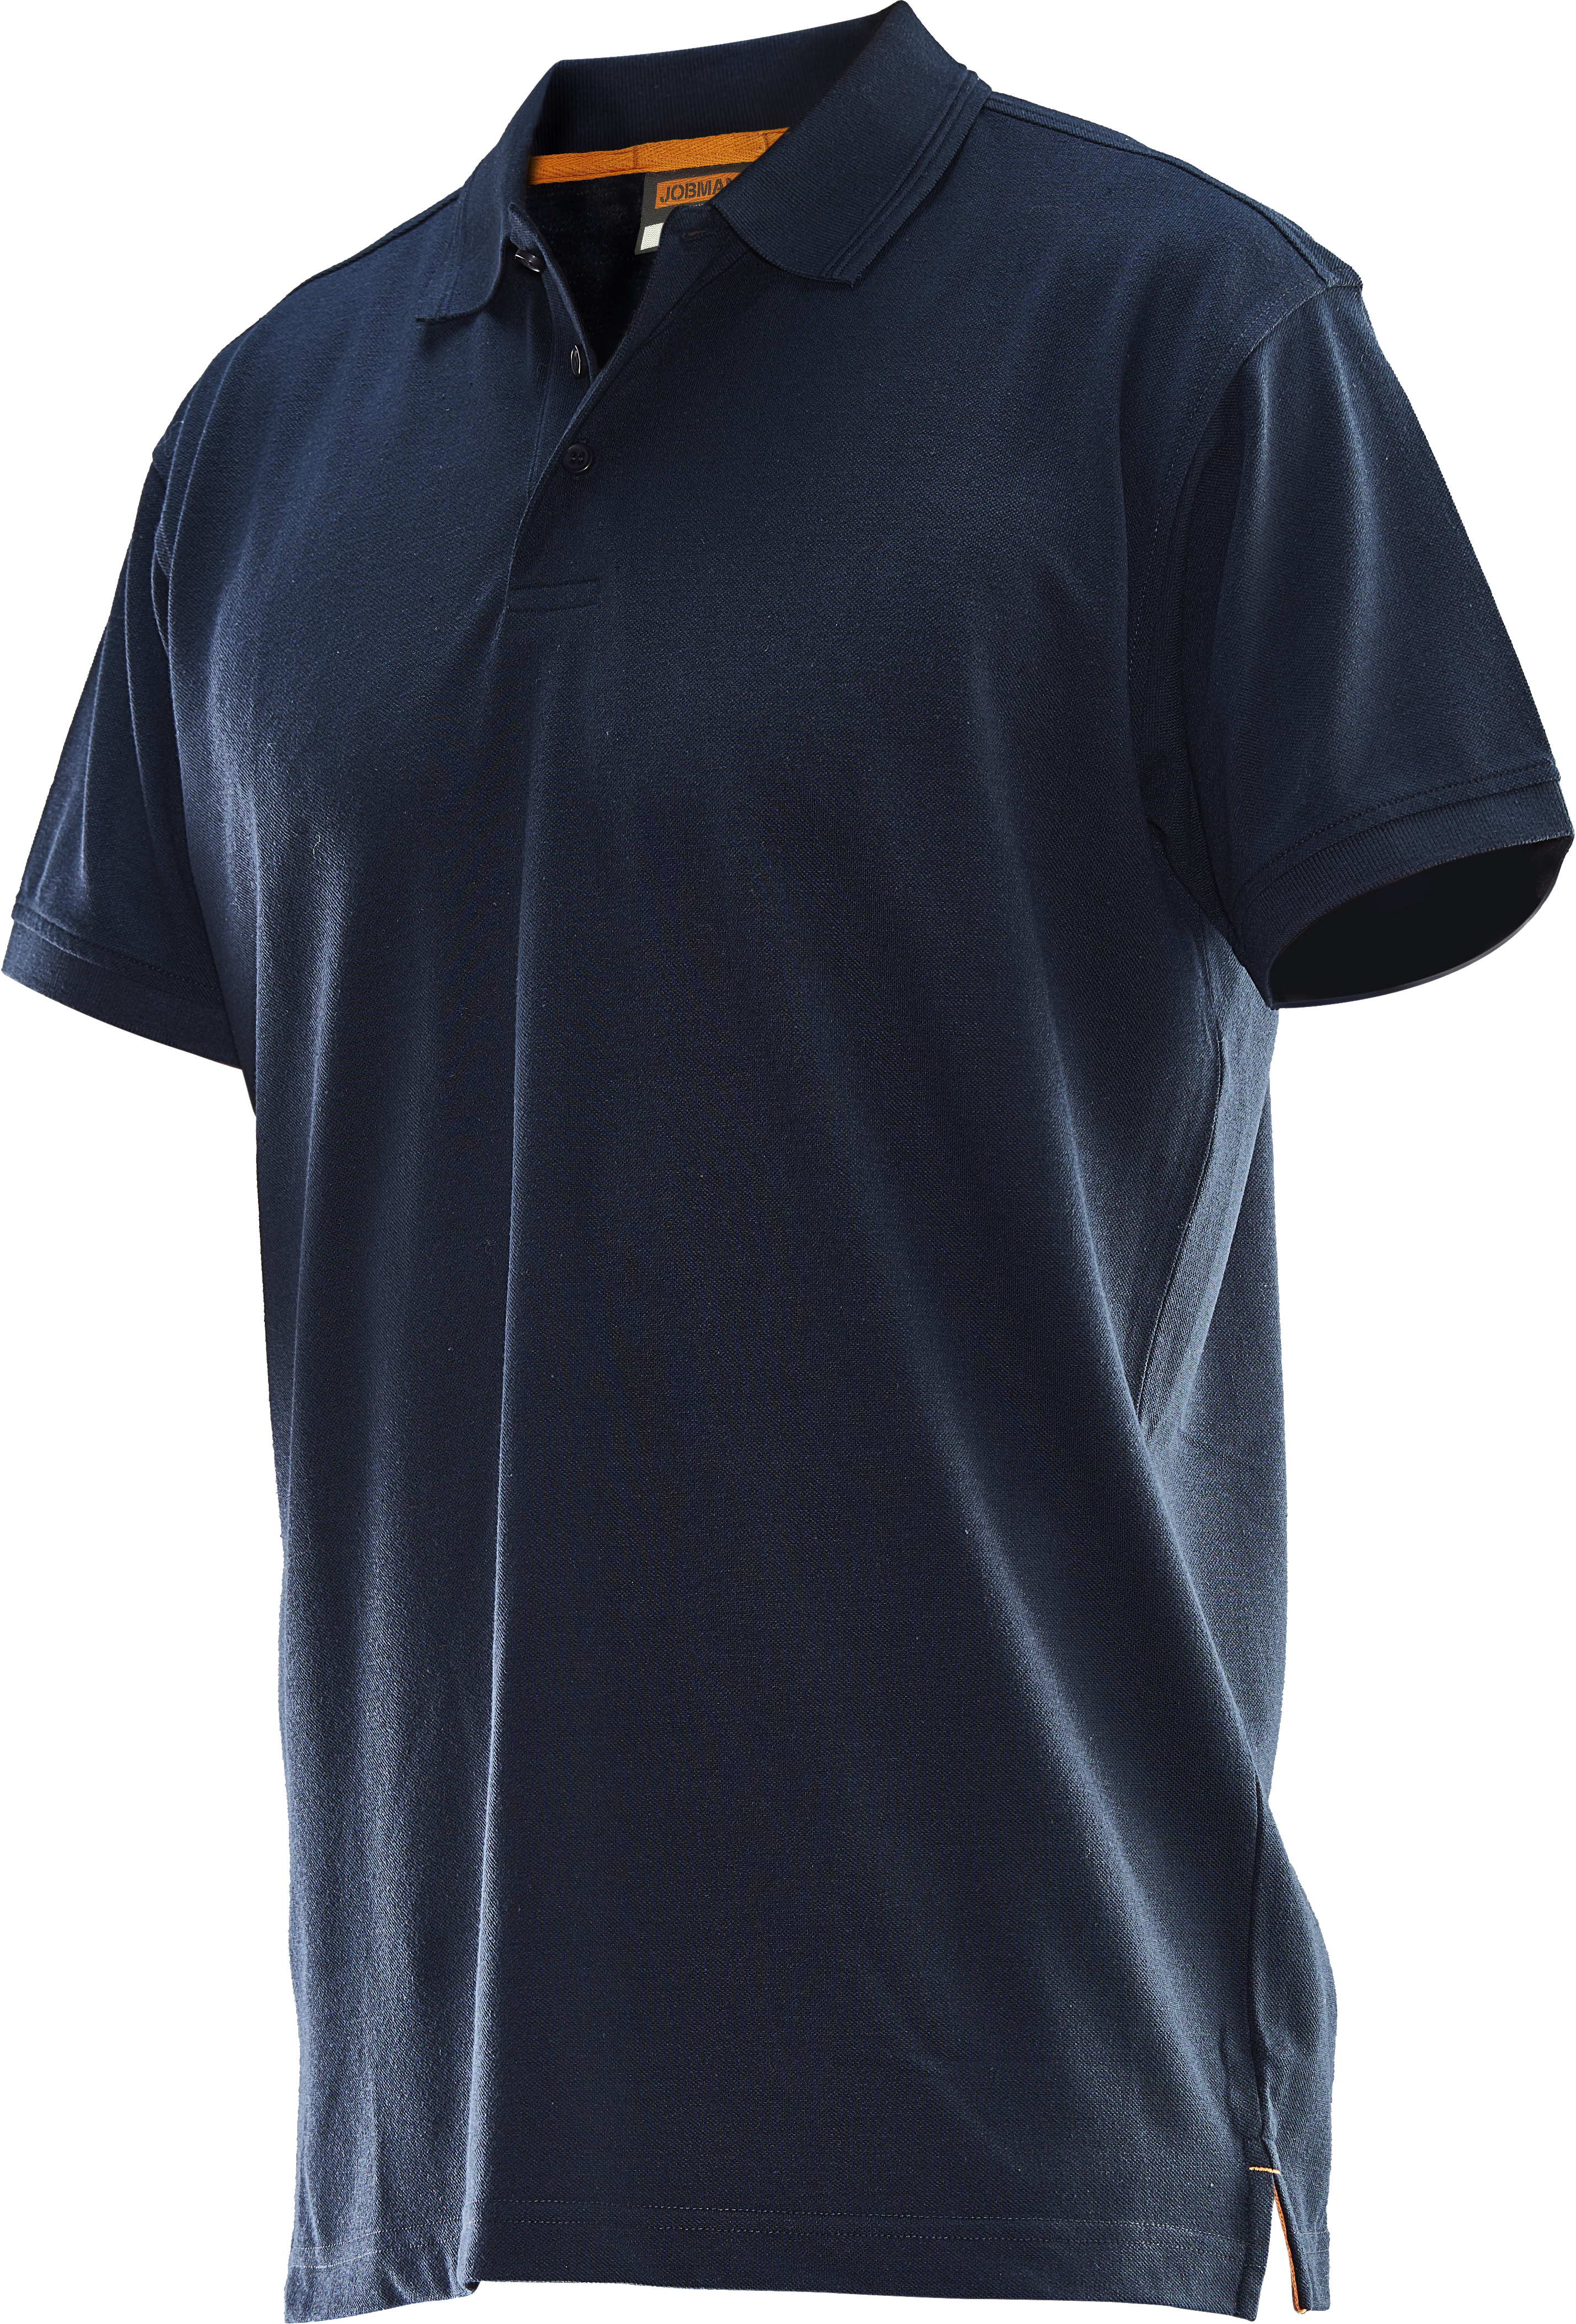 5564 T-shirt polo XXL bleu marine